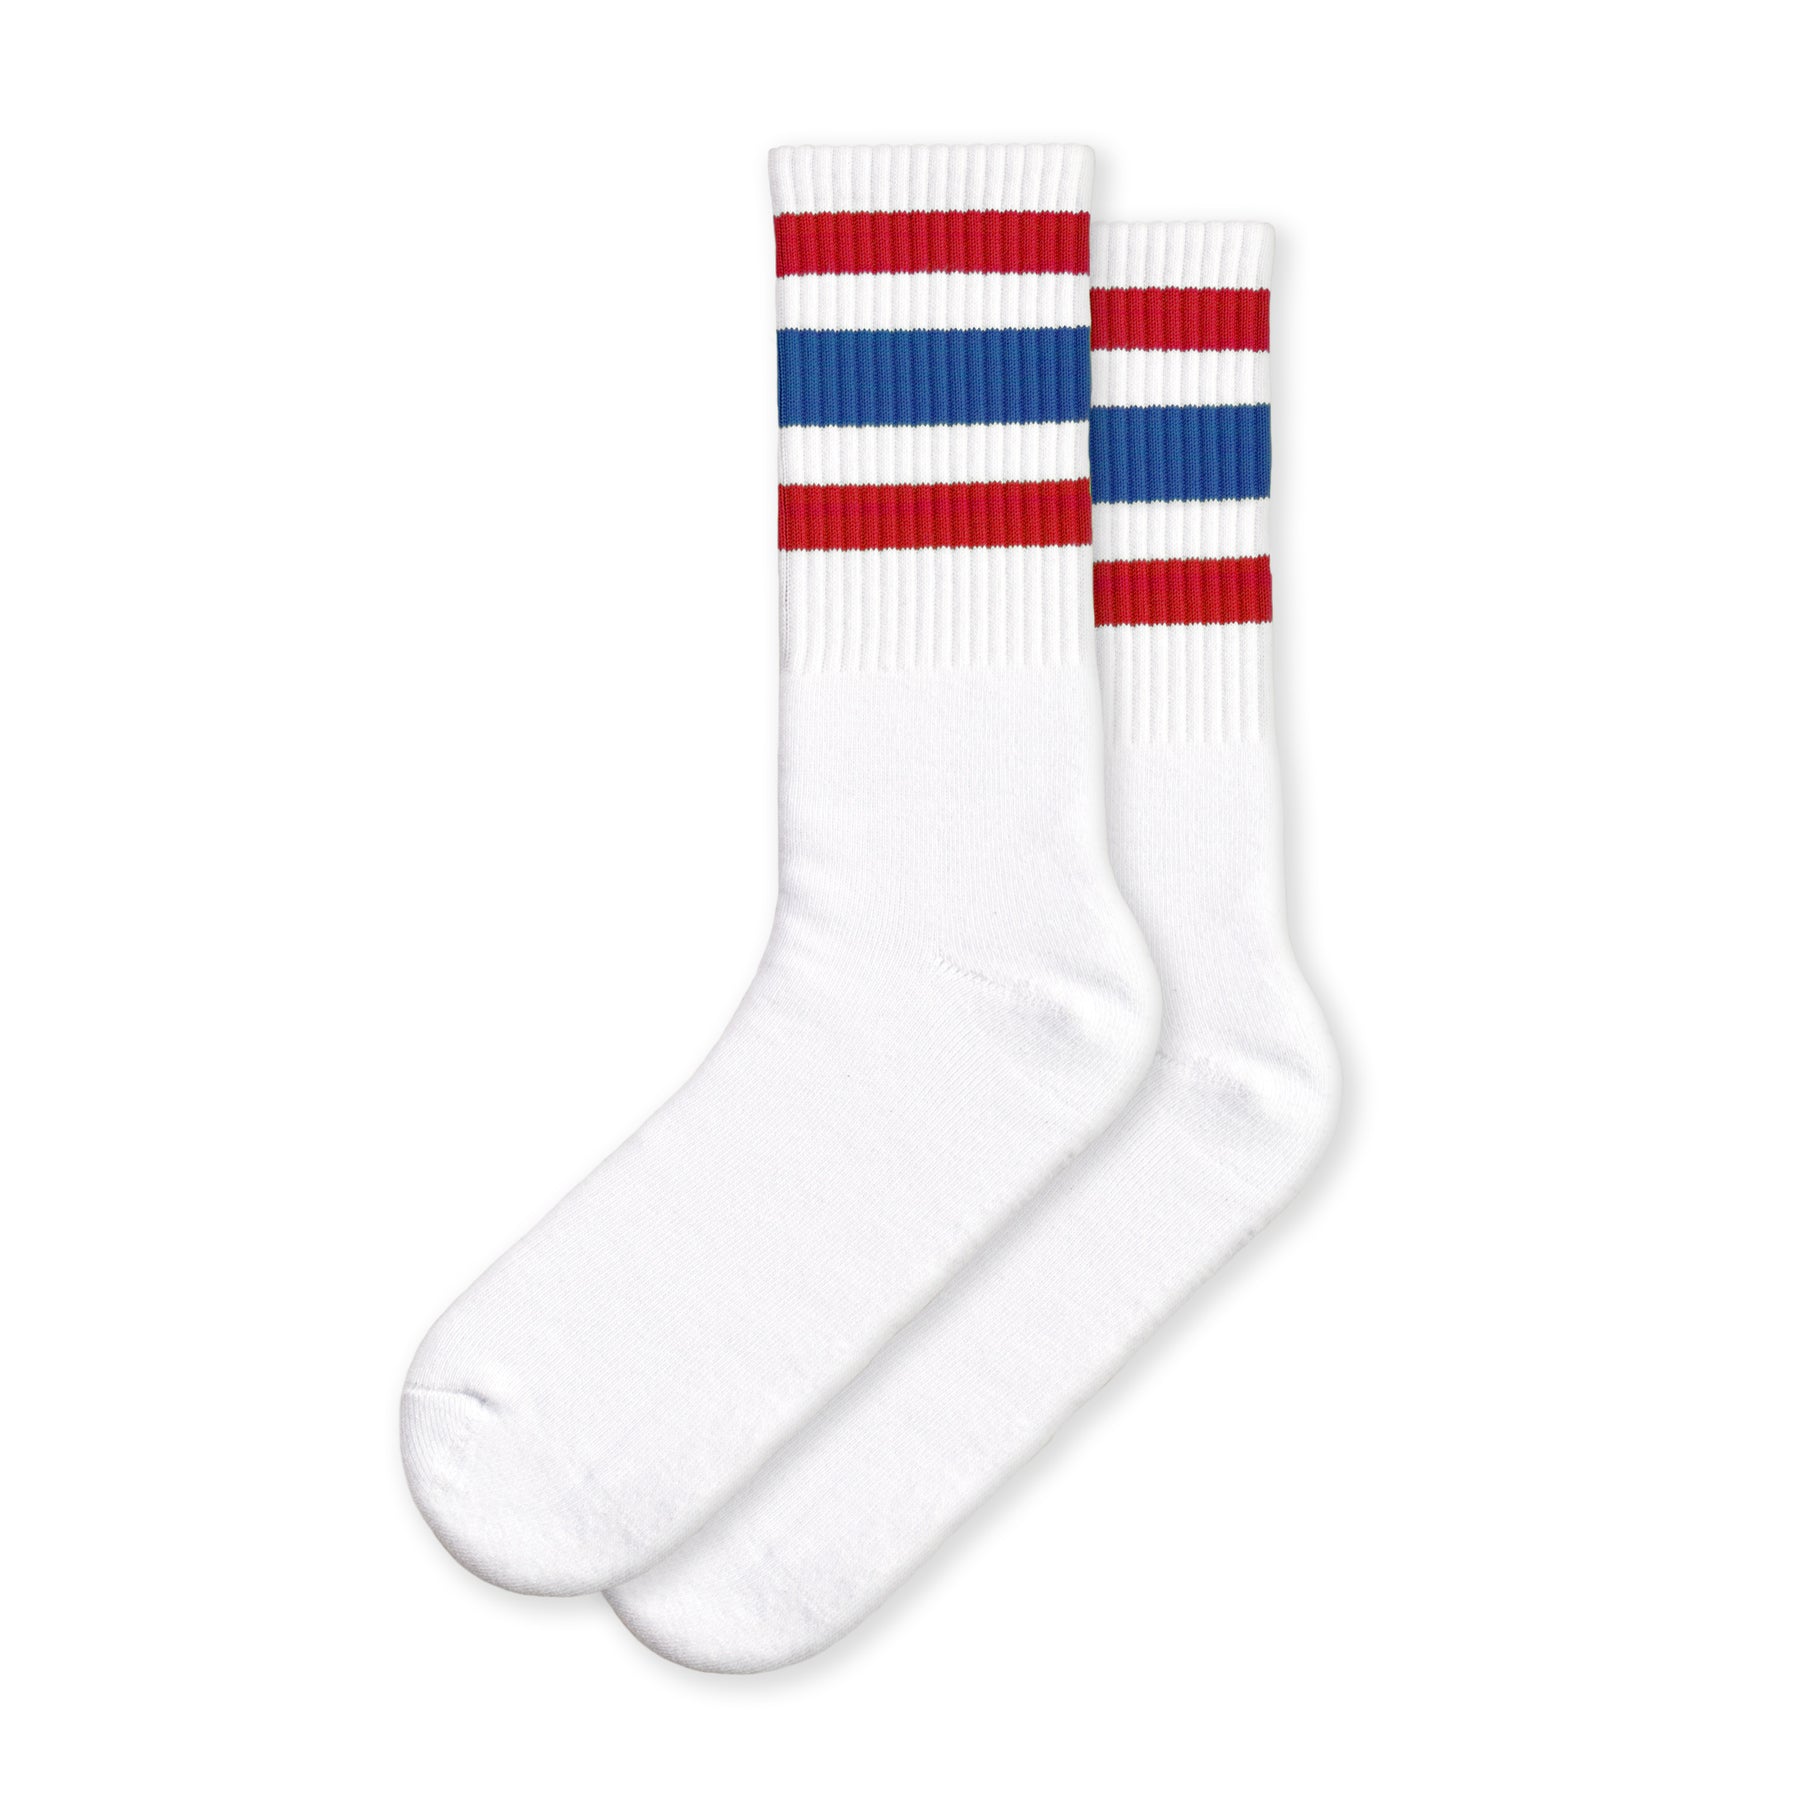 Point Three Socks: White w/ blue red stripes